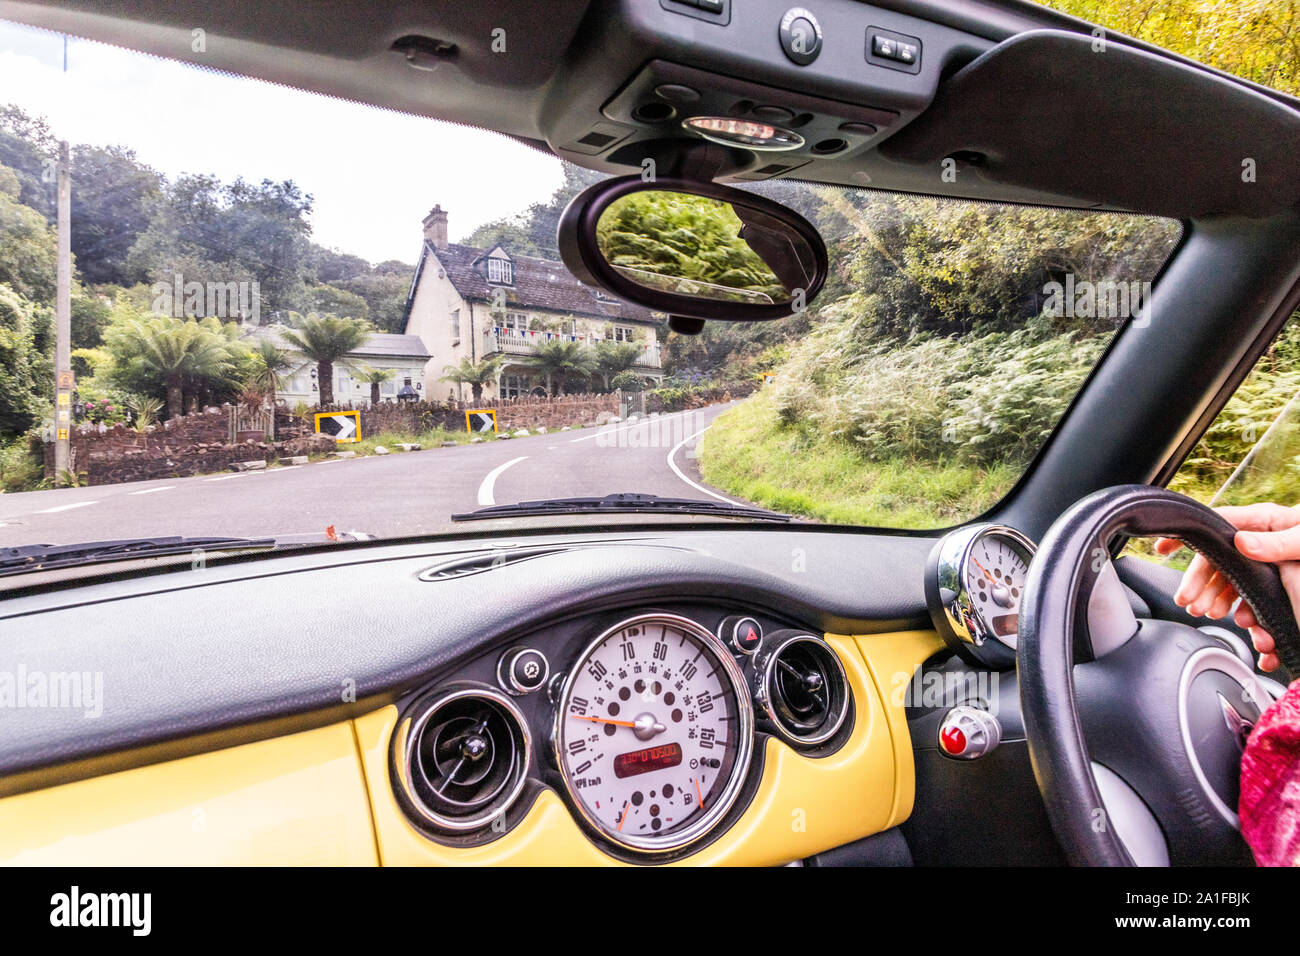 Passenger's view of a yellow convertible Mini Cooper going up Porlock Hill, Somerset UK Stock Photo